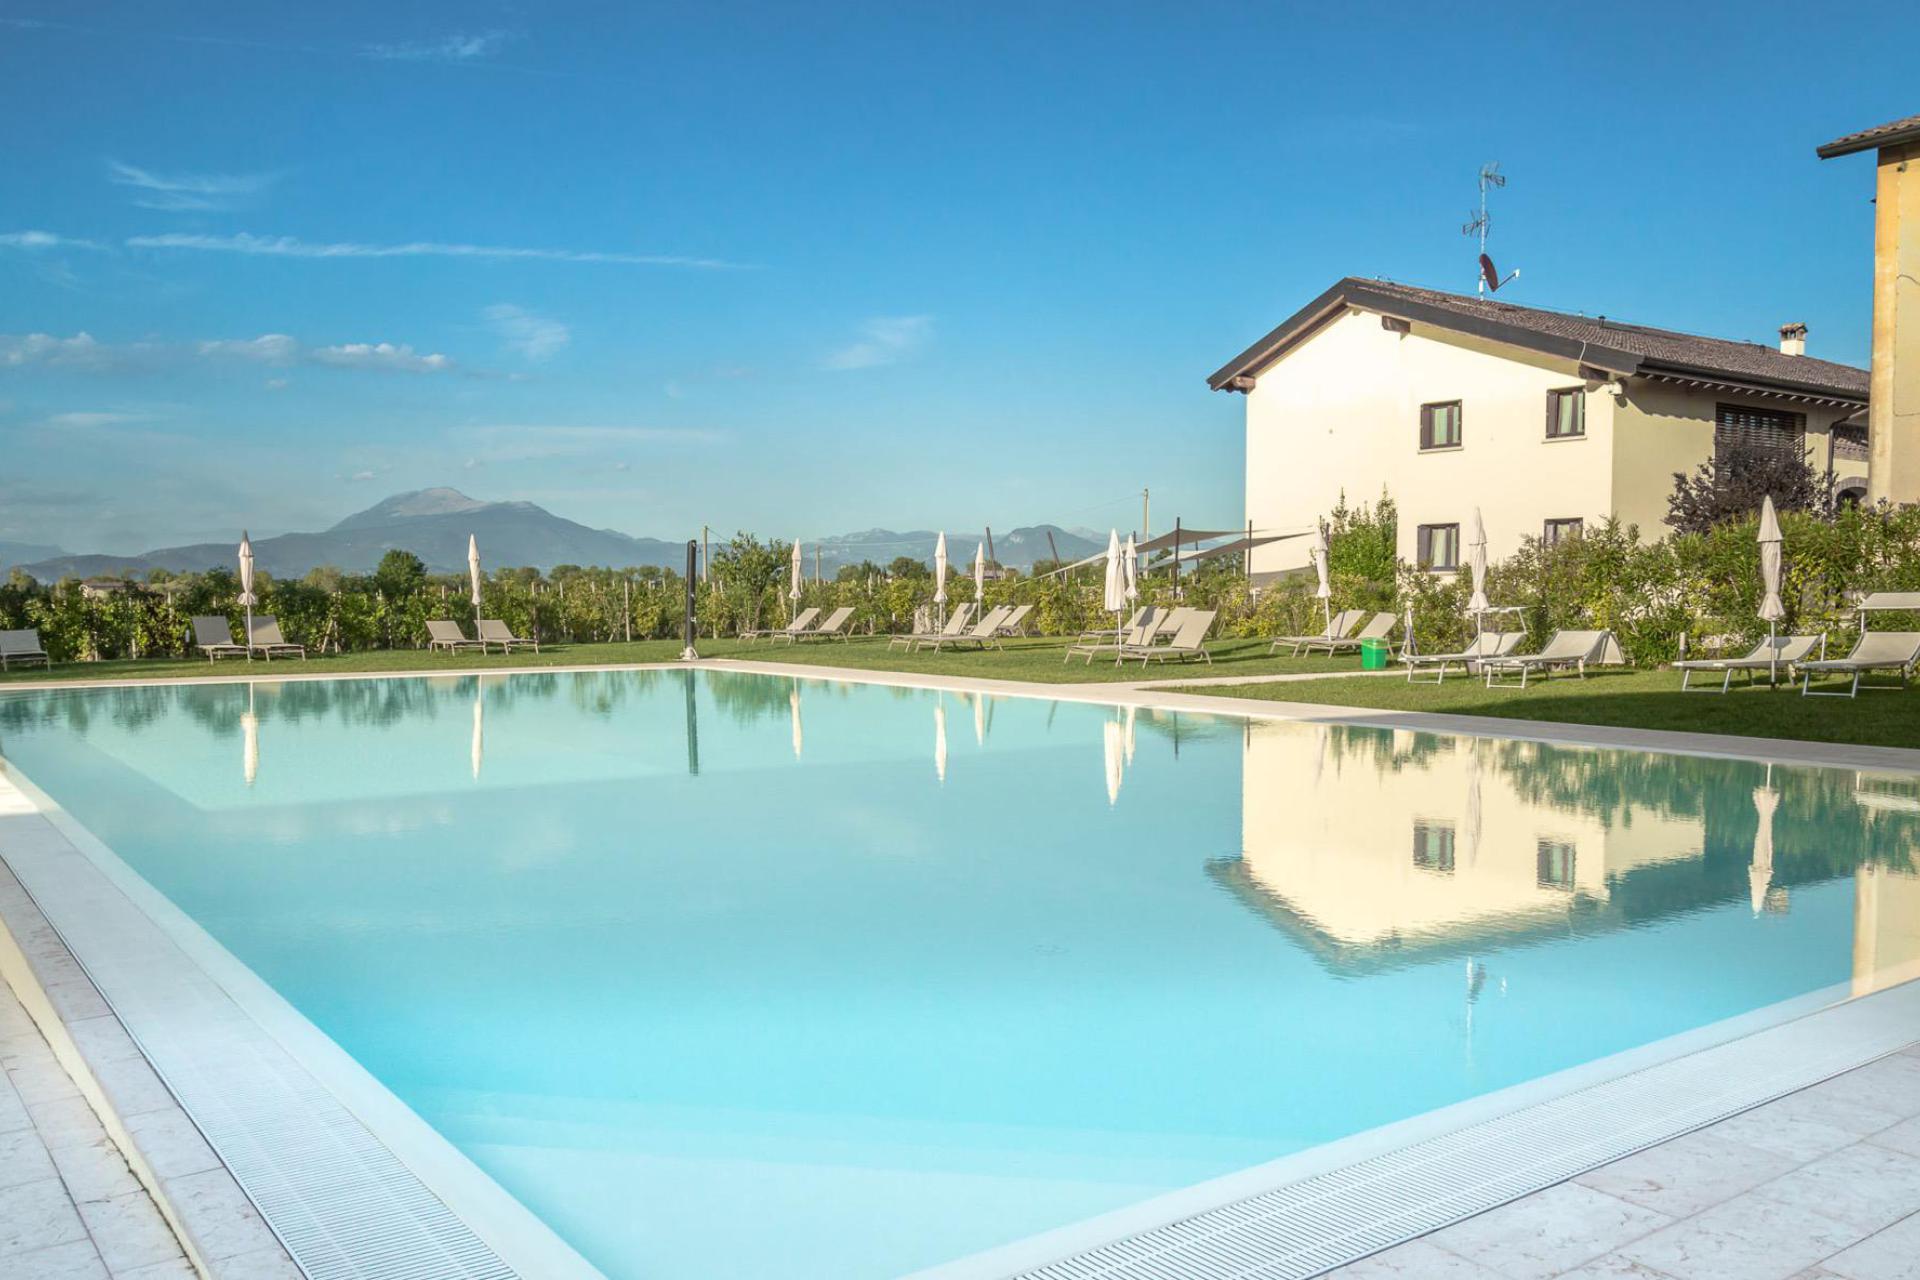 Agriturismo for families near Lake Garda